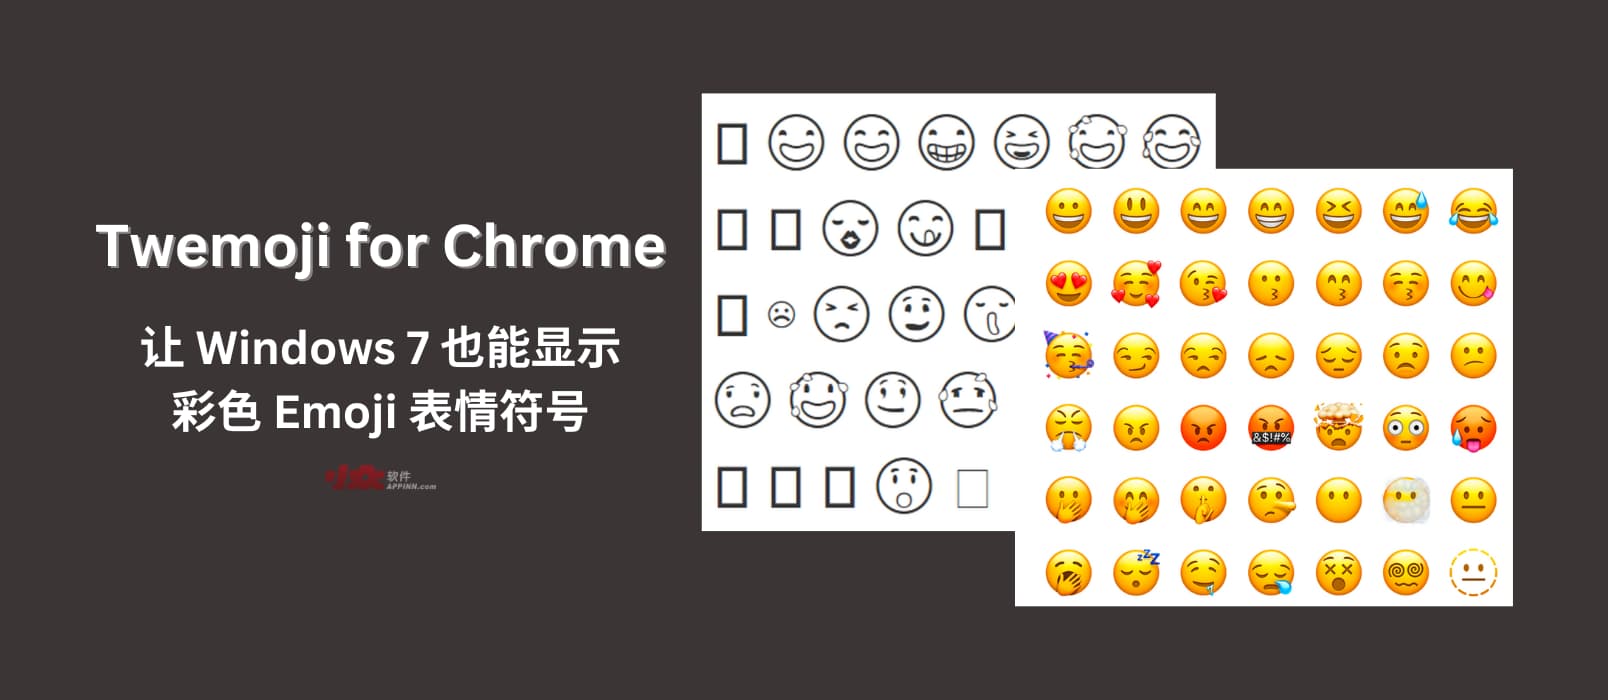 Twemoji for Chrome - 让 Windows 7 显示彩色 Emoji 表情符号